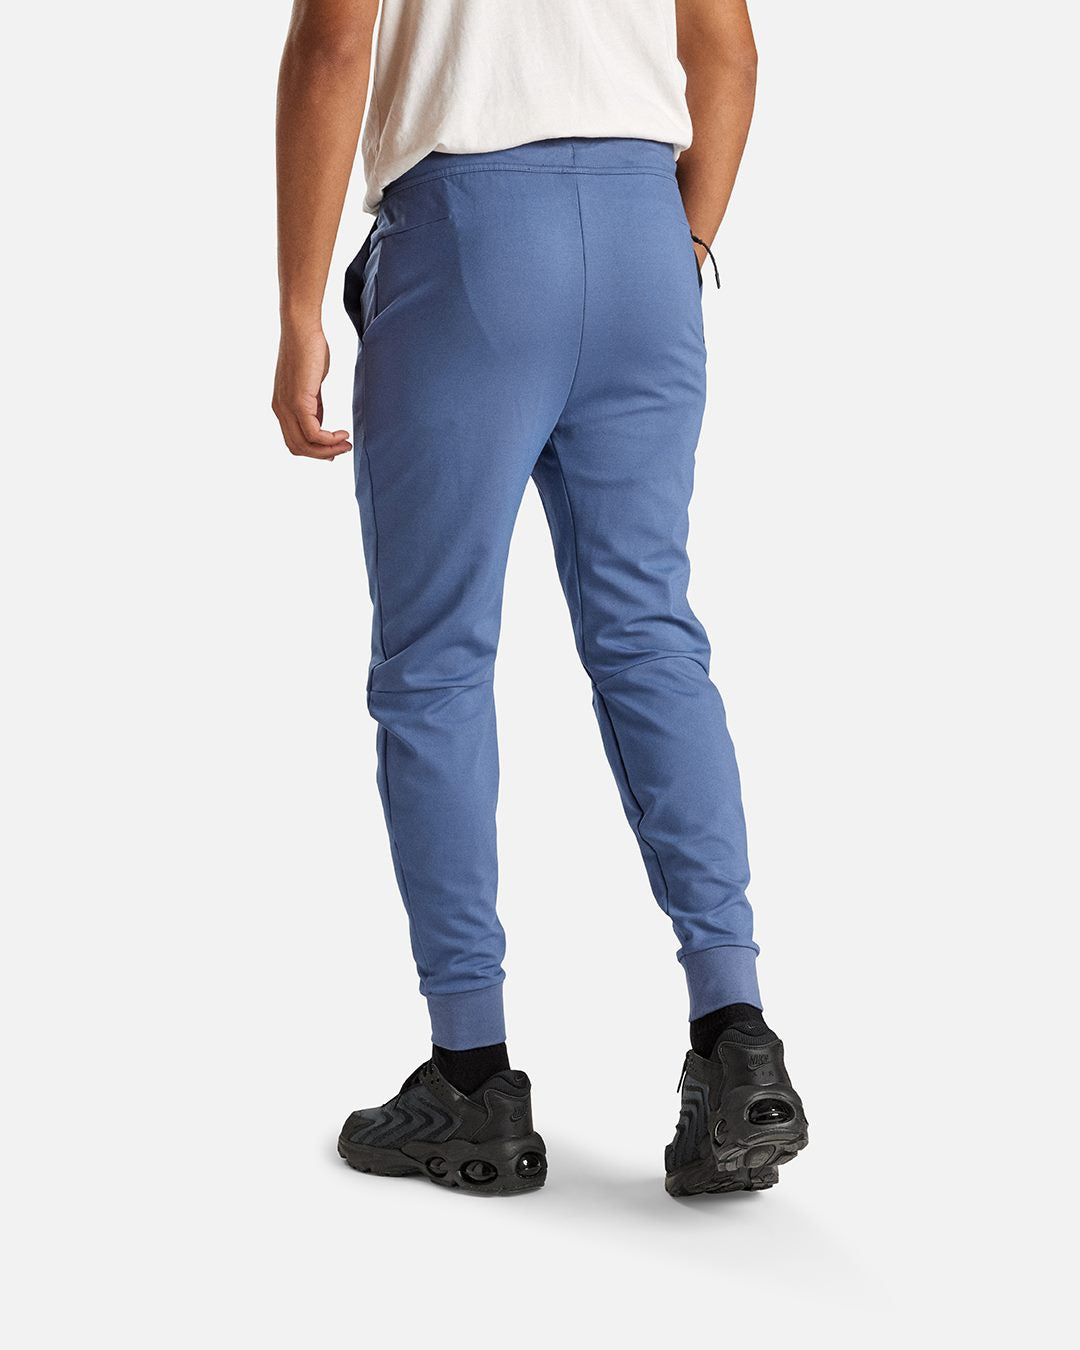 Pantaloni leggeri Nike Tech Fleece - Blu/Neri